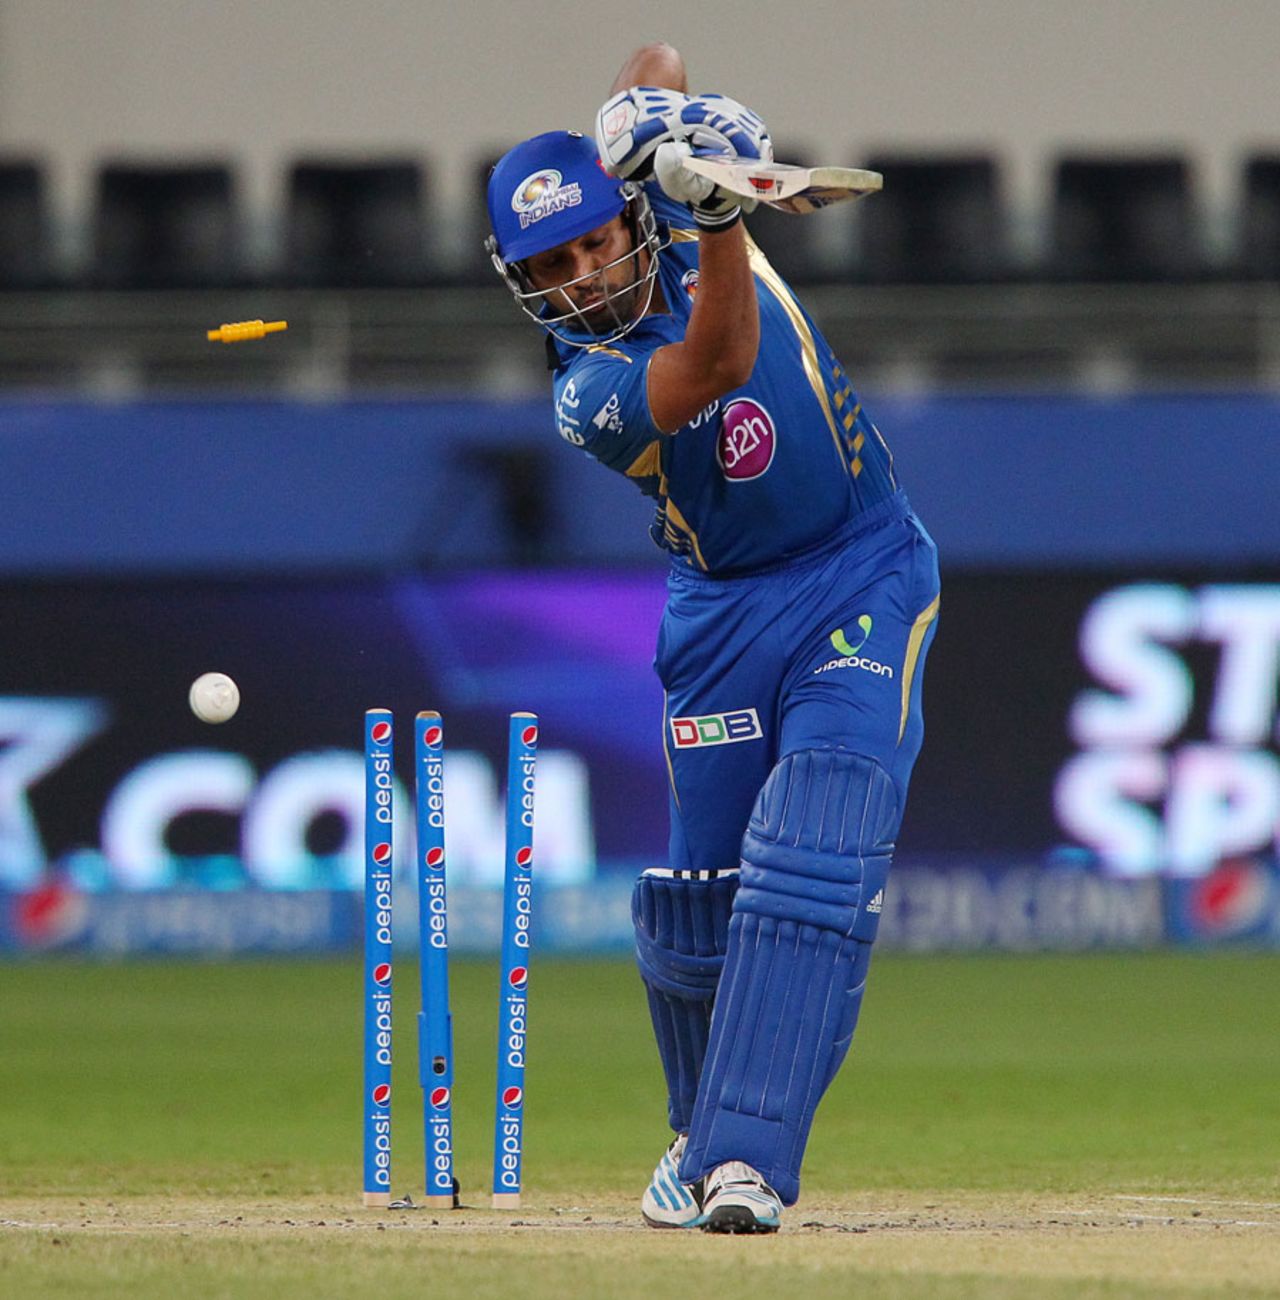 Rohit Sharma was bowled for 1, Mumbai Indians v Sunrisers Hyderabad, IPL 2014, Dubai, April 30, 2014